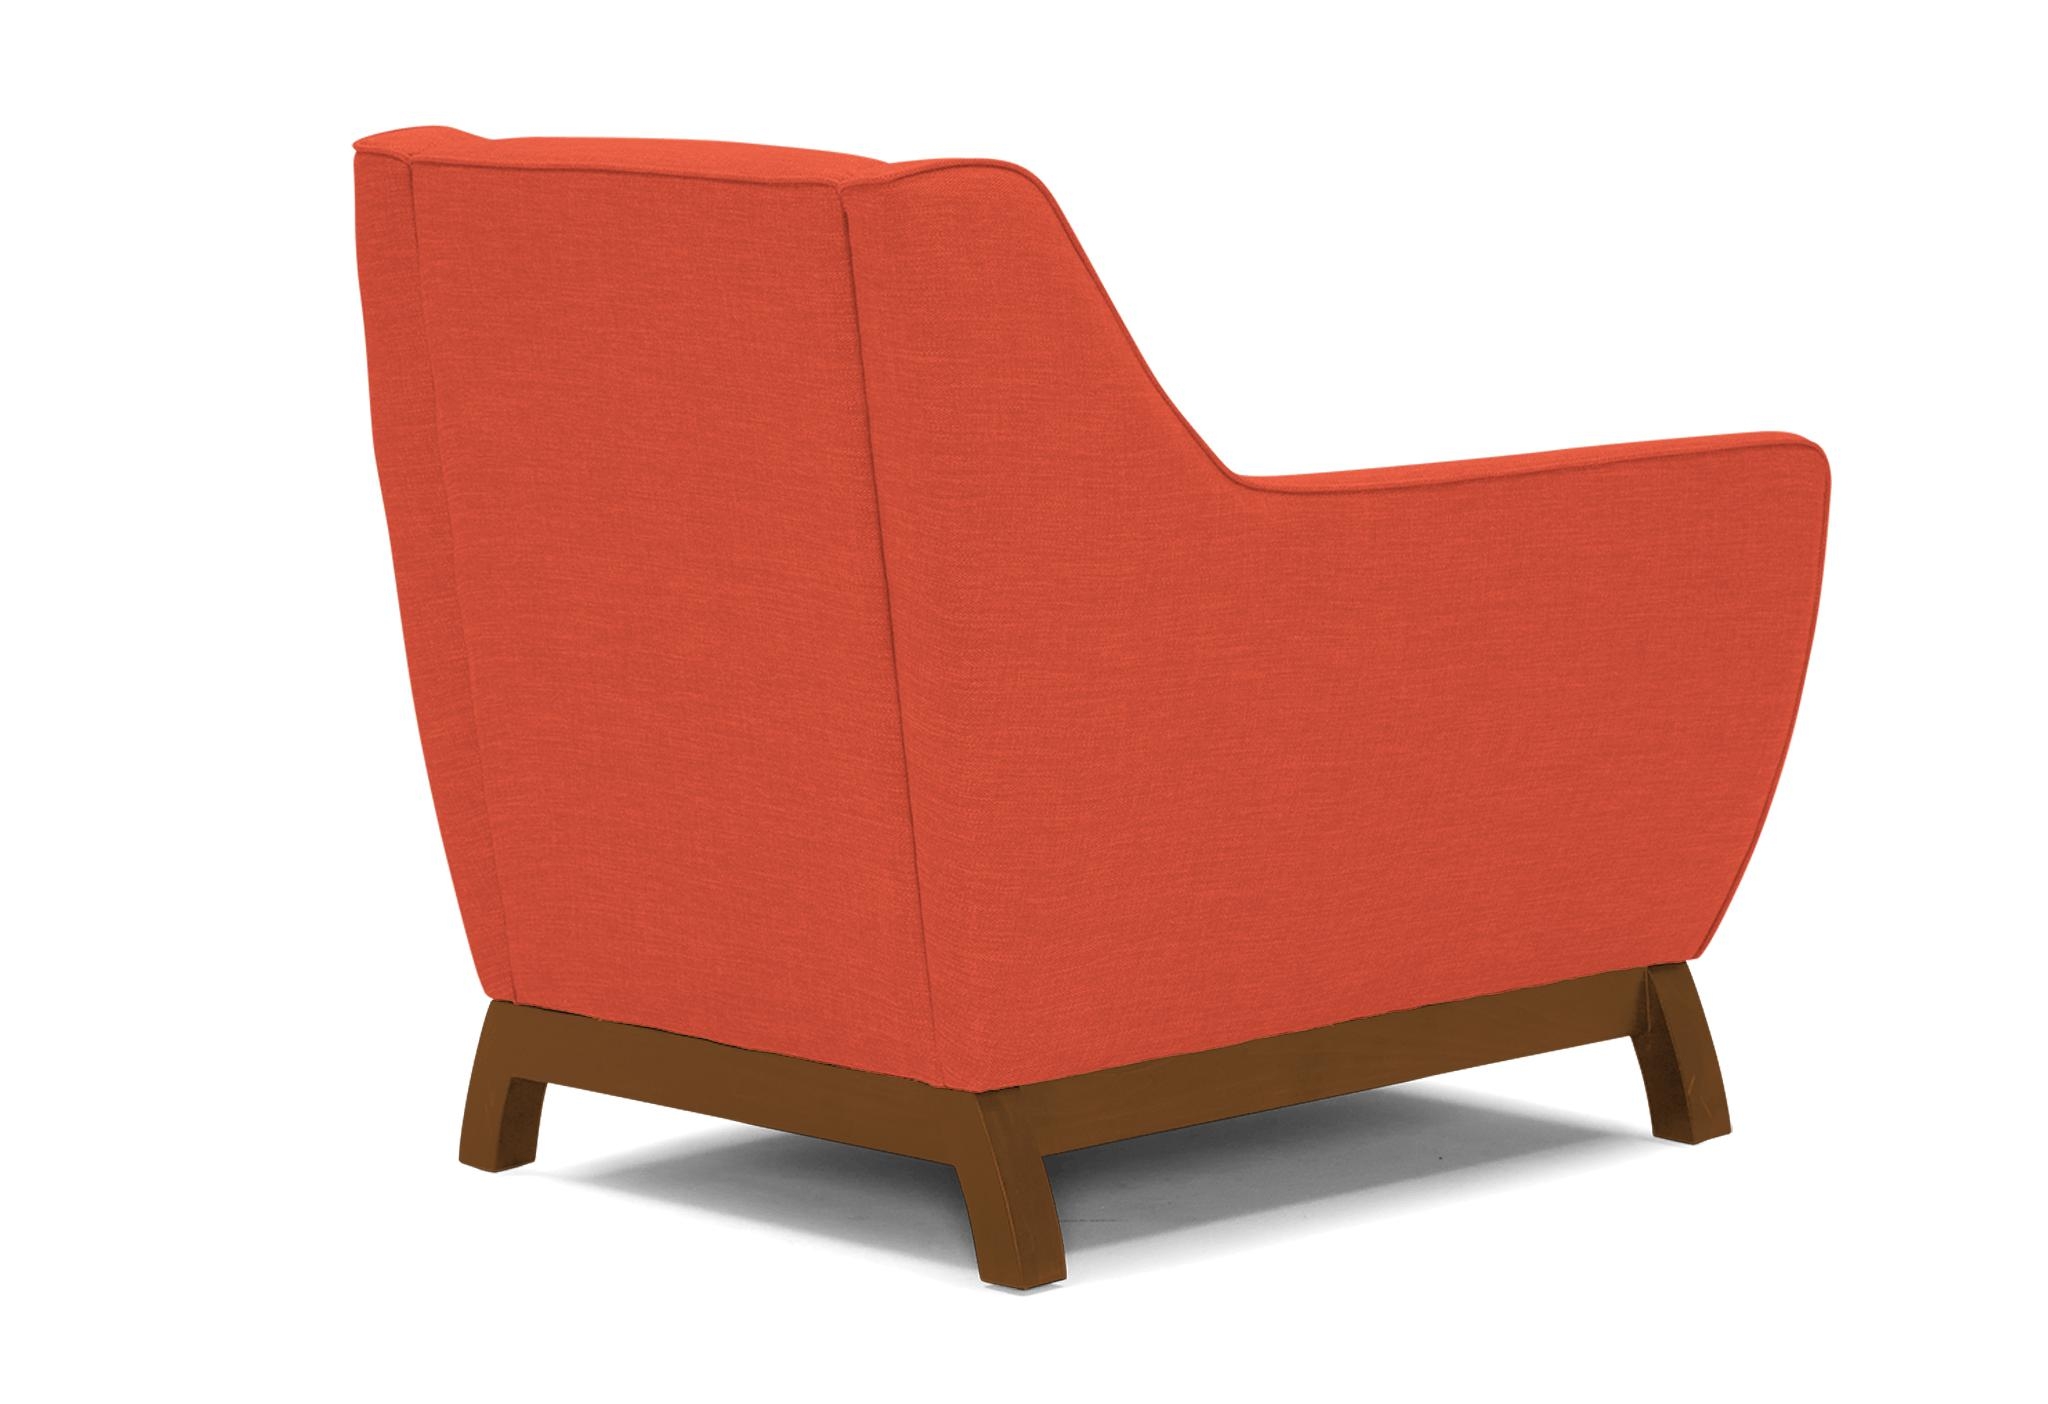 Orange Owen Mid Century Modern Chair - Key Largo Coral - Mocha - Image 3